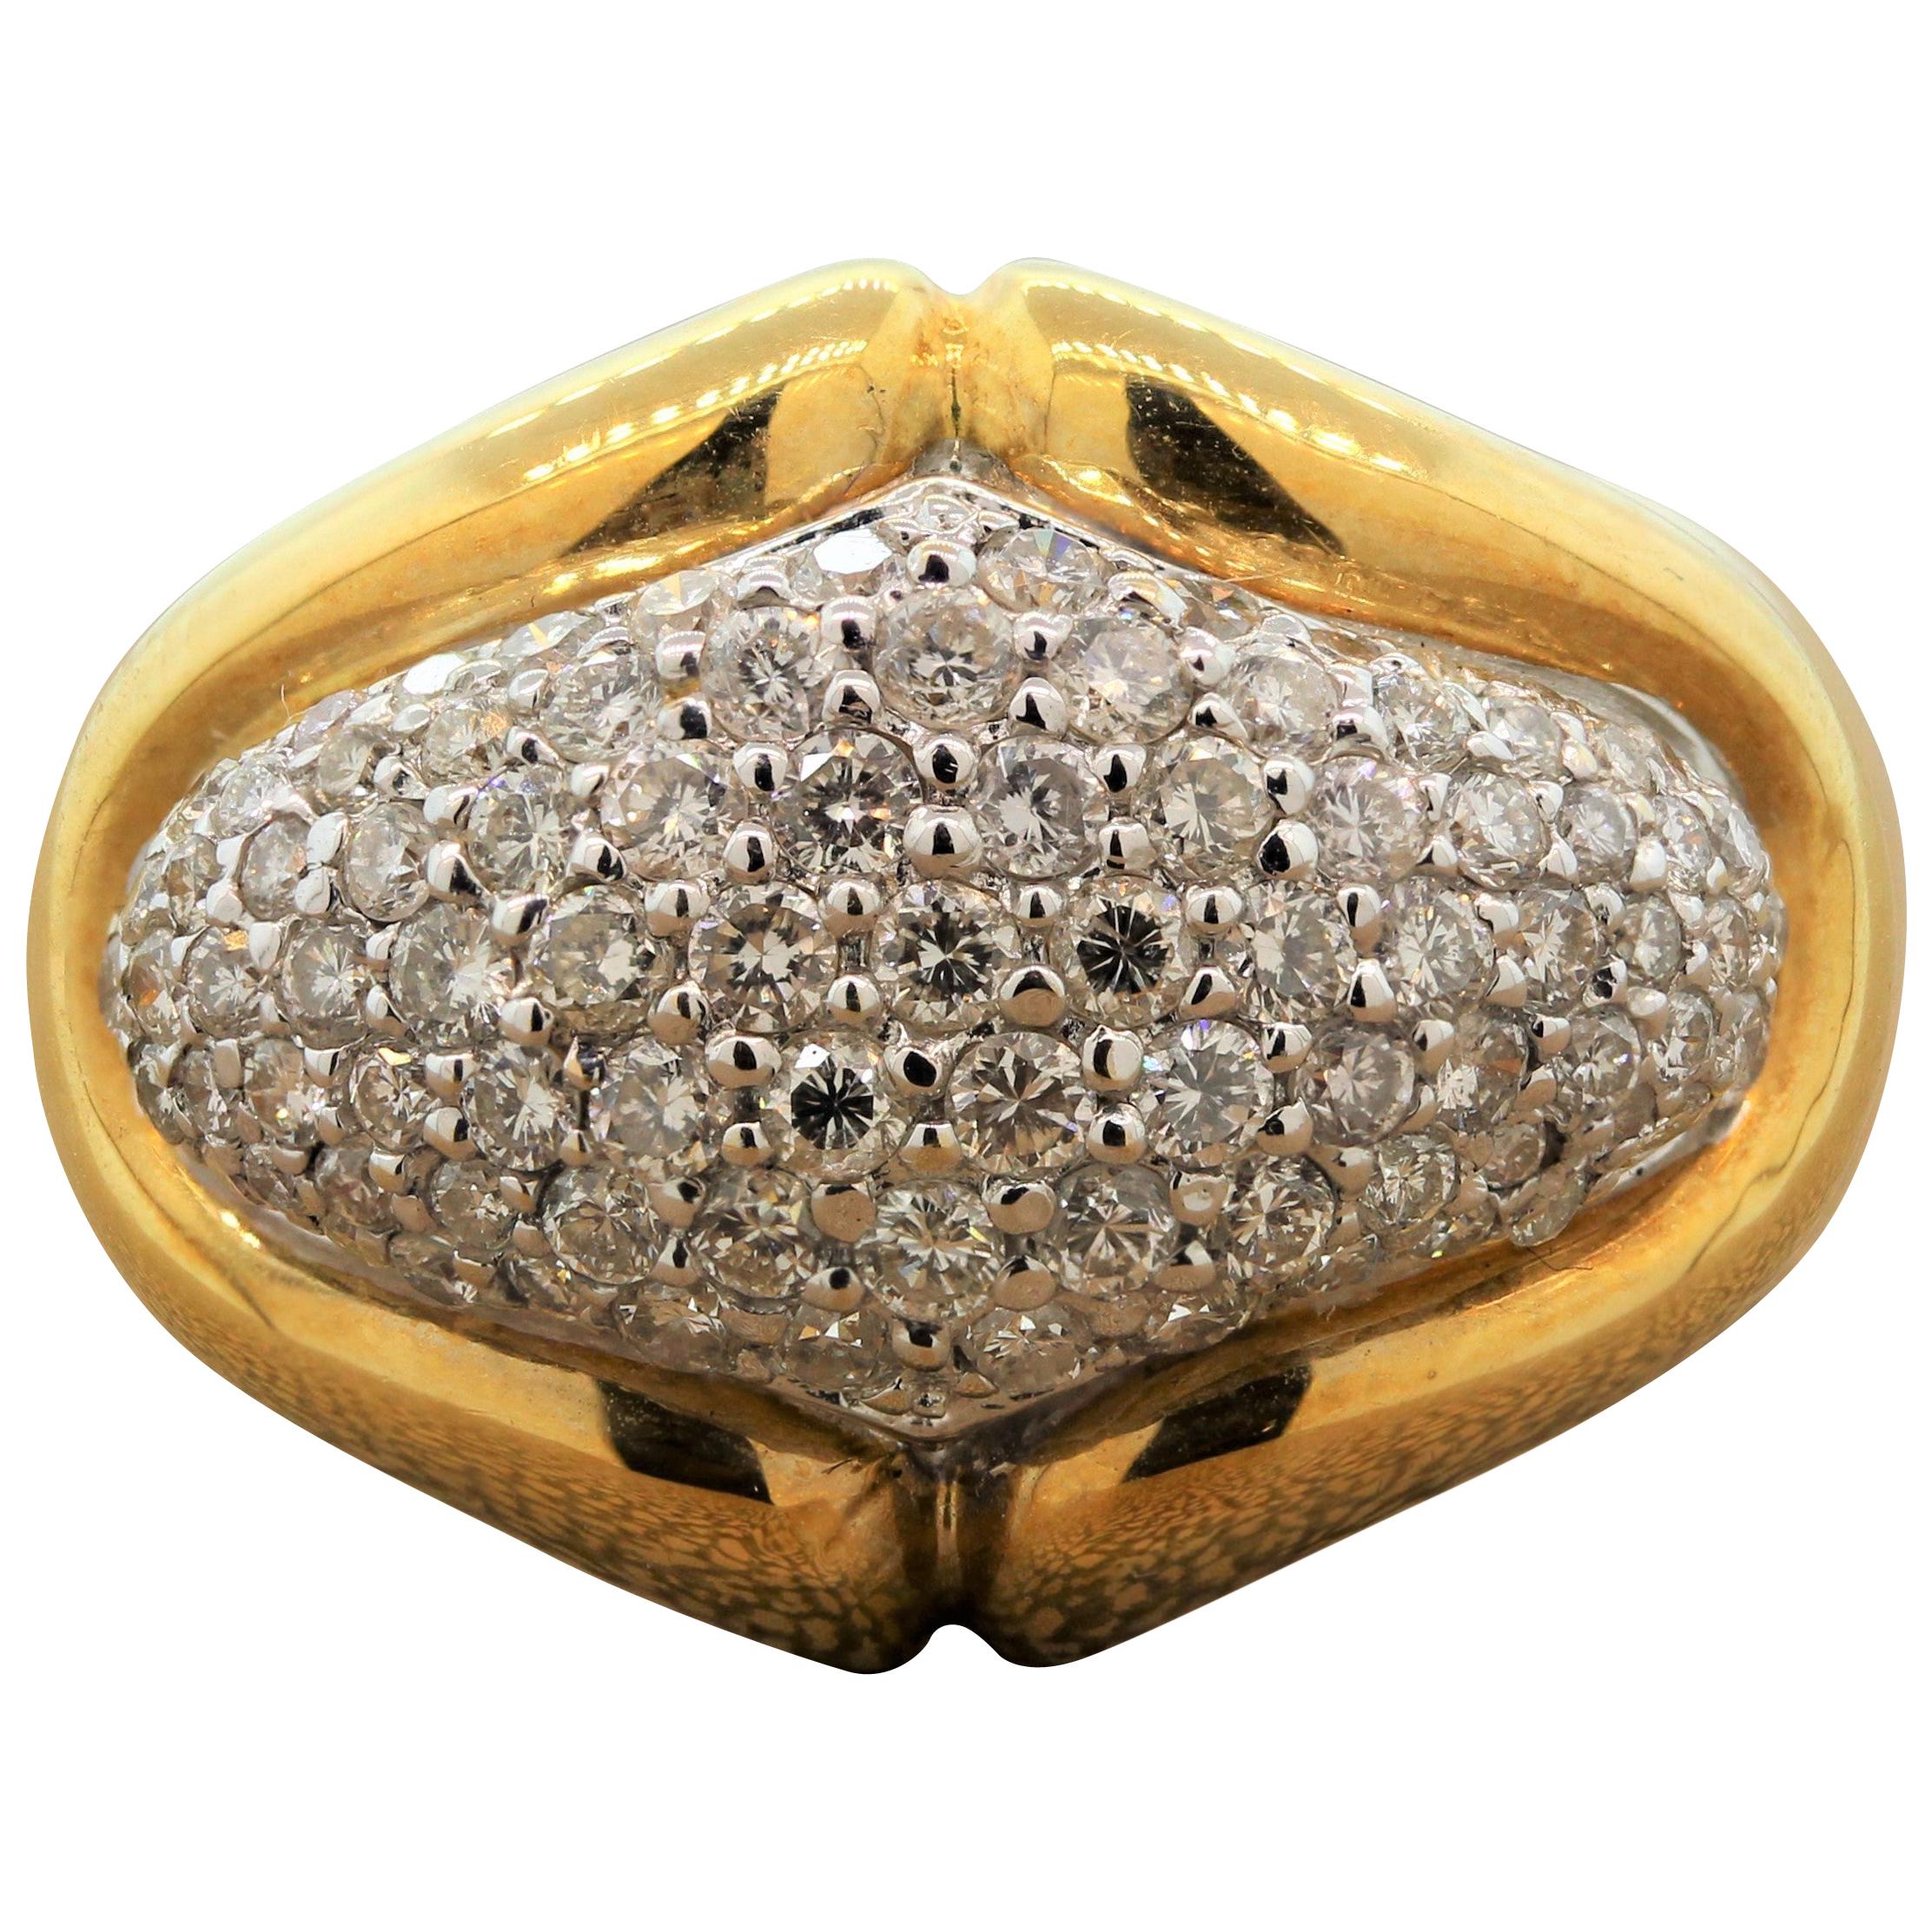 Diamond Gold Dome Ring